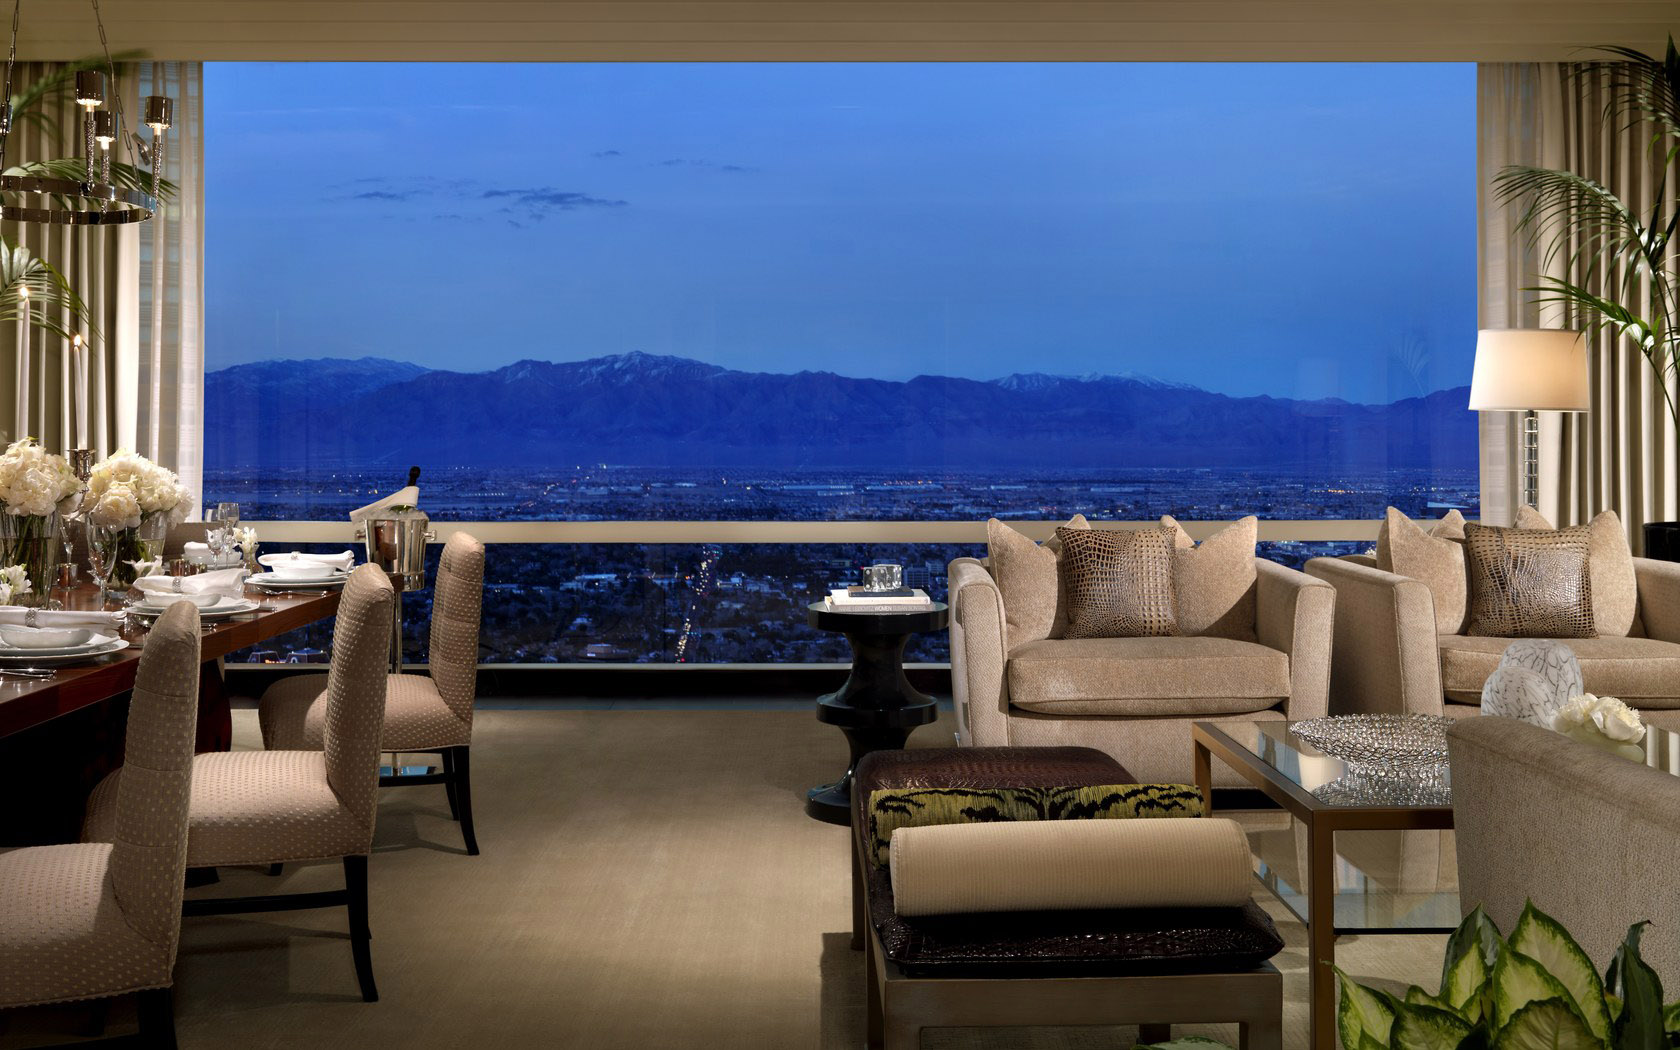 Romantic Hotel Restaurant Landscape Desktop Wallpaper